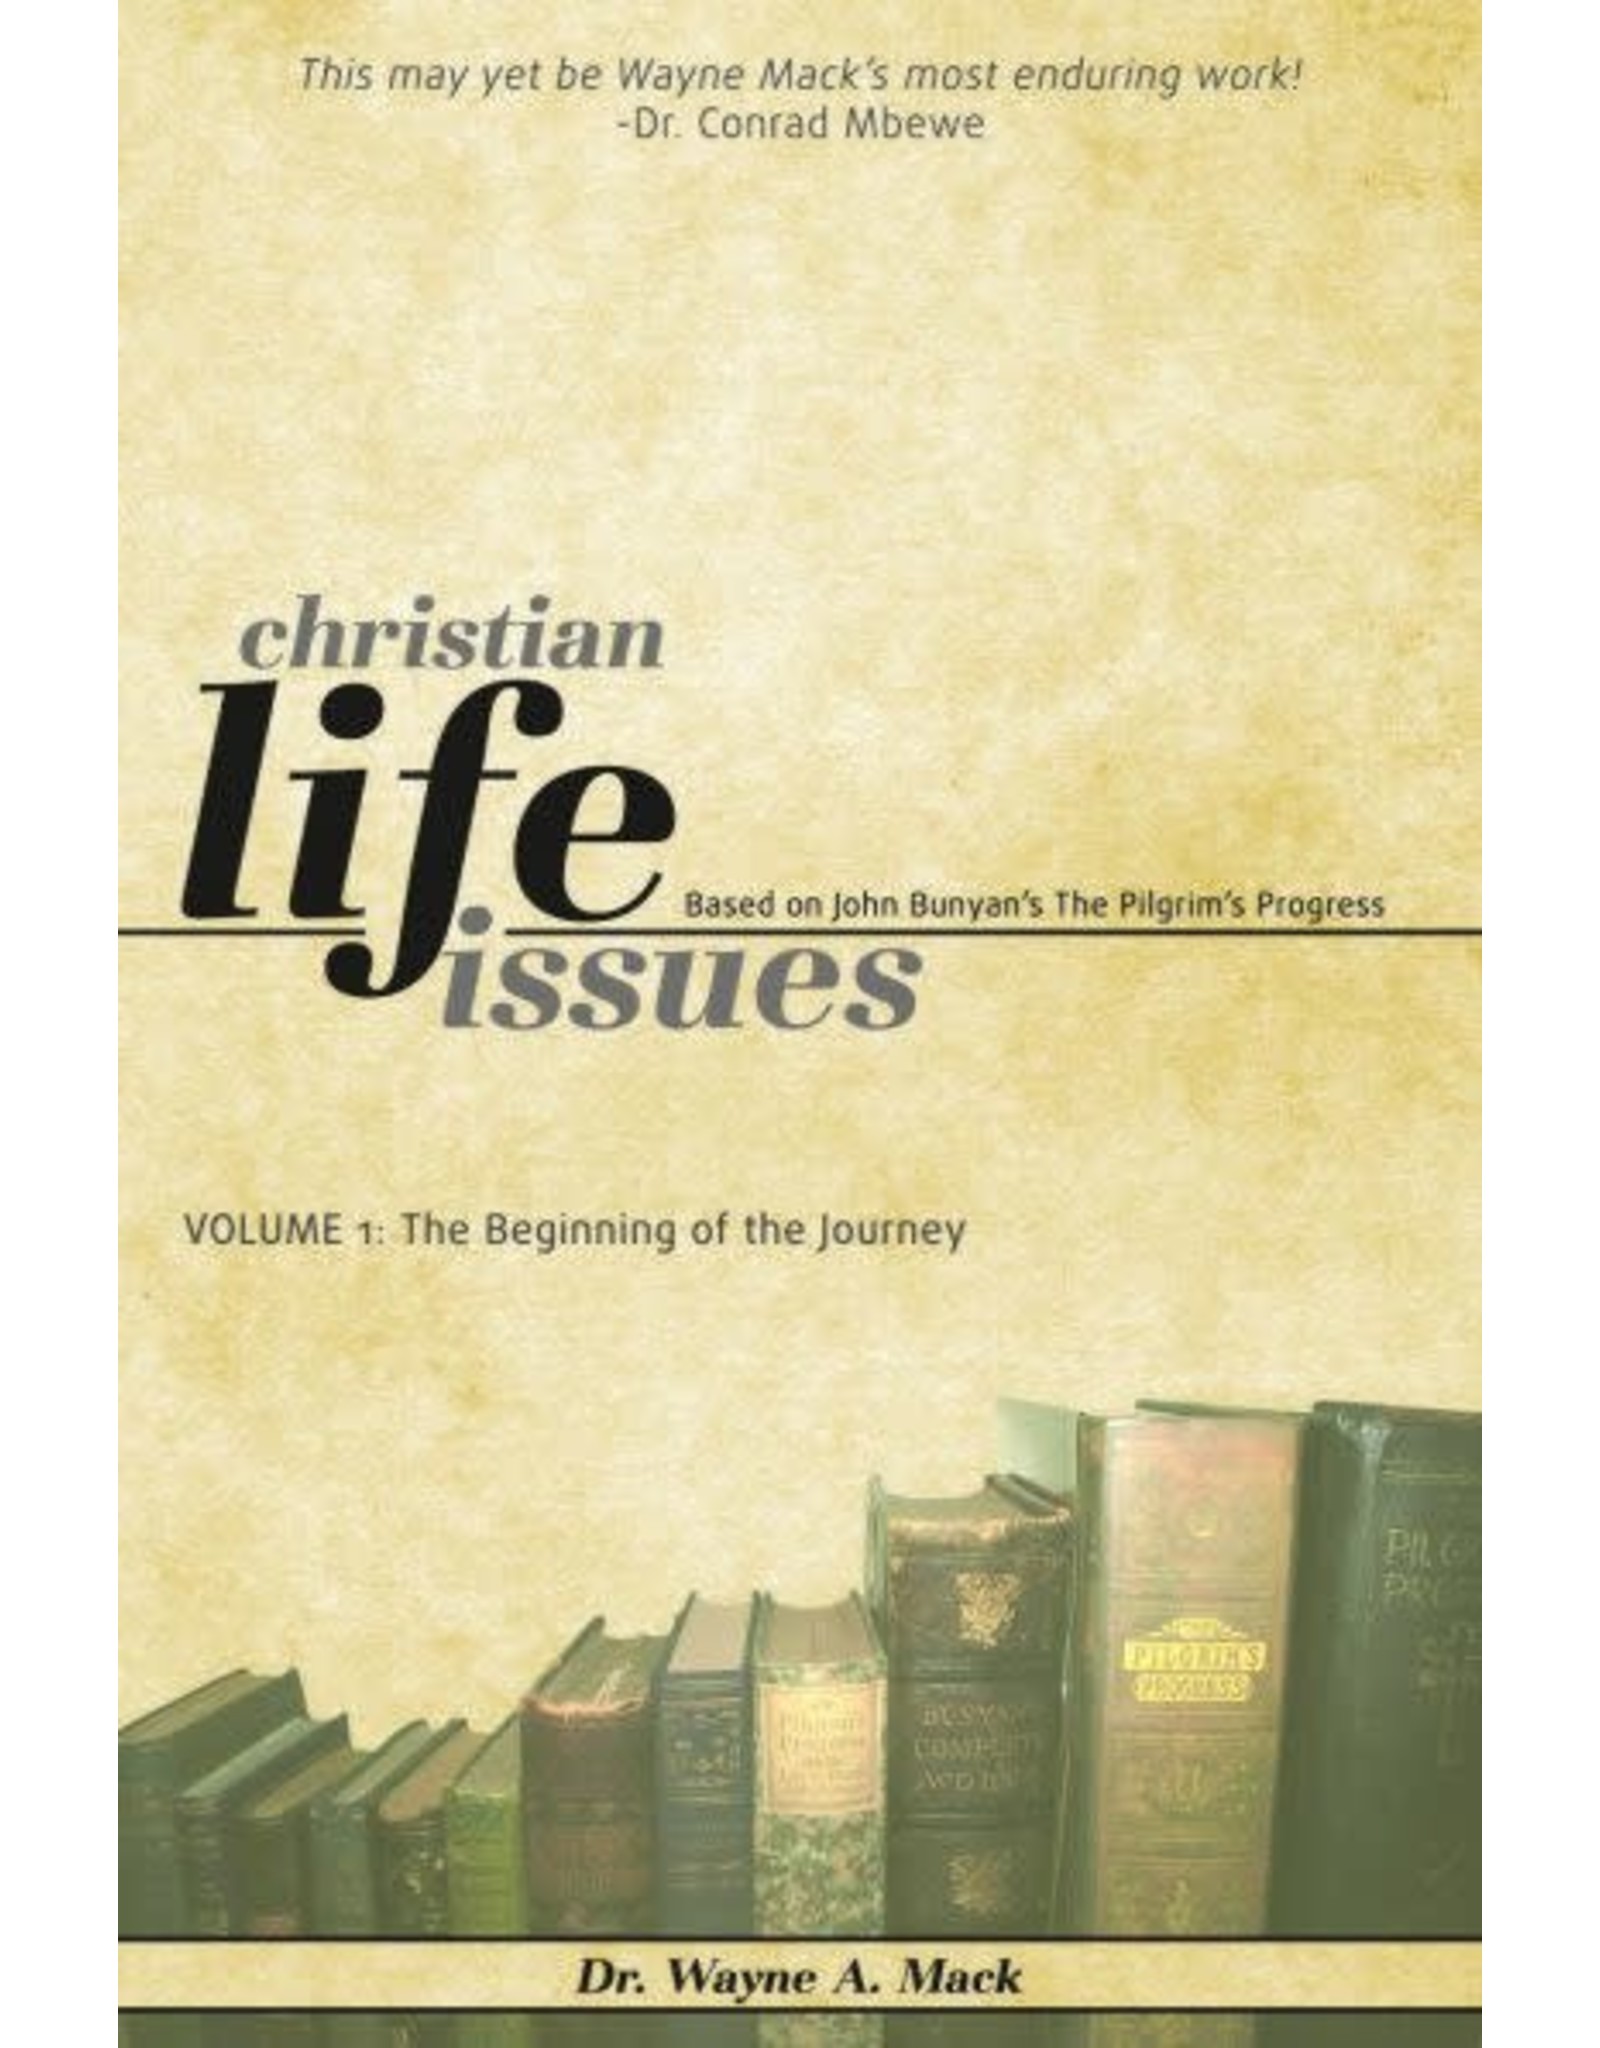 Wayne A Mack Christian Life Issues  Volume 1